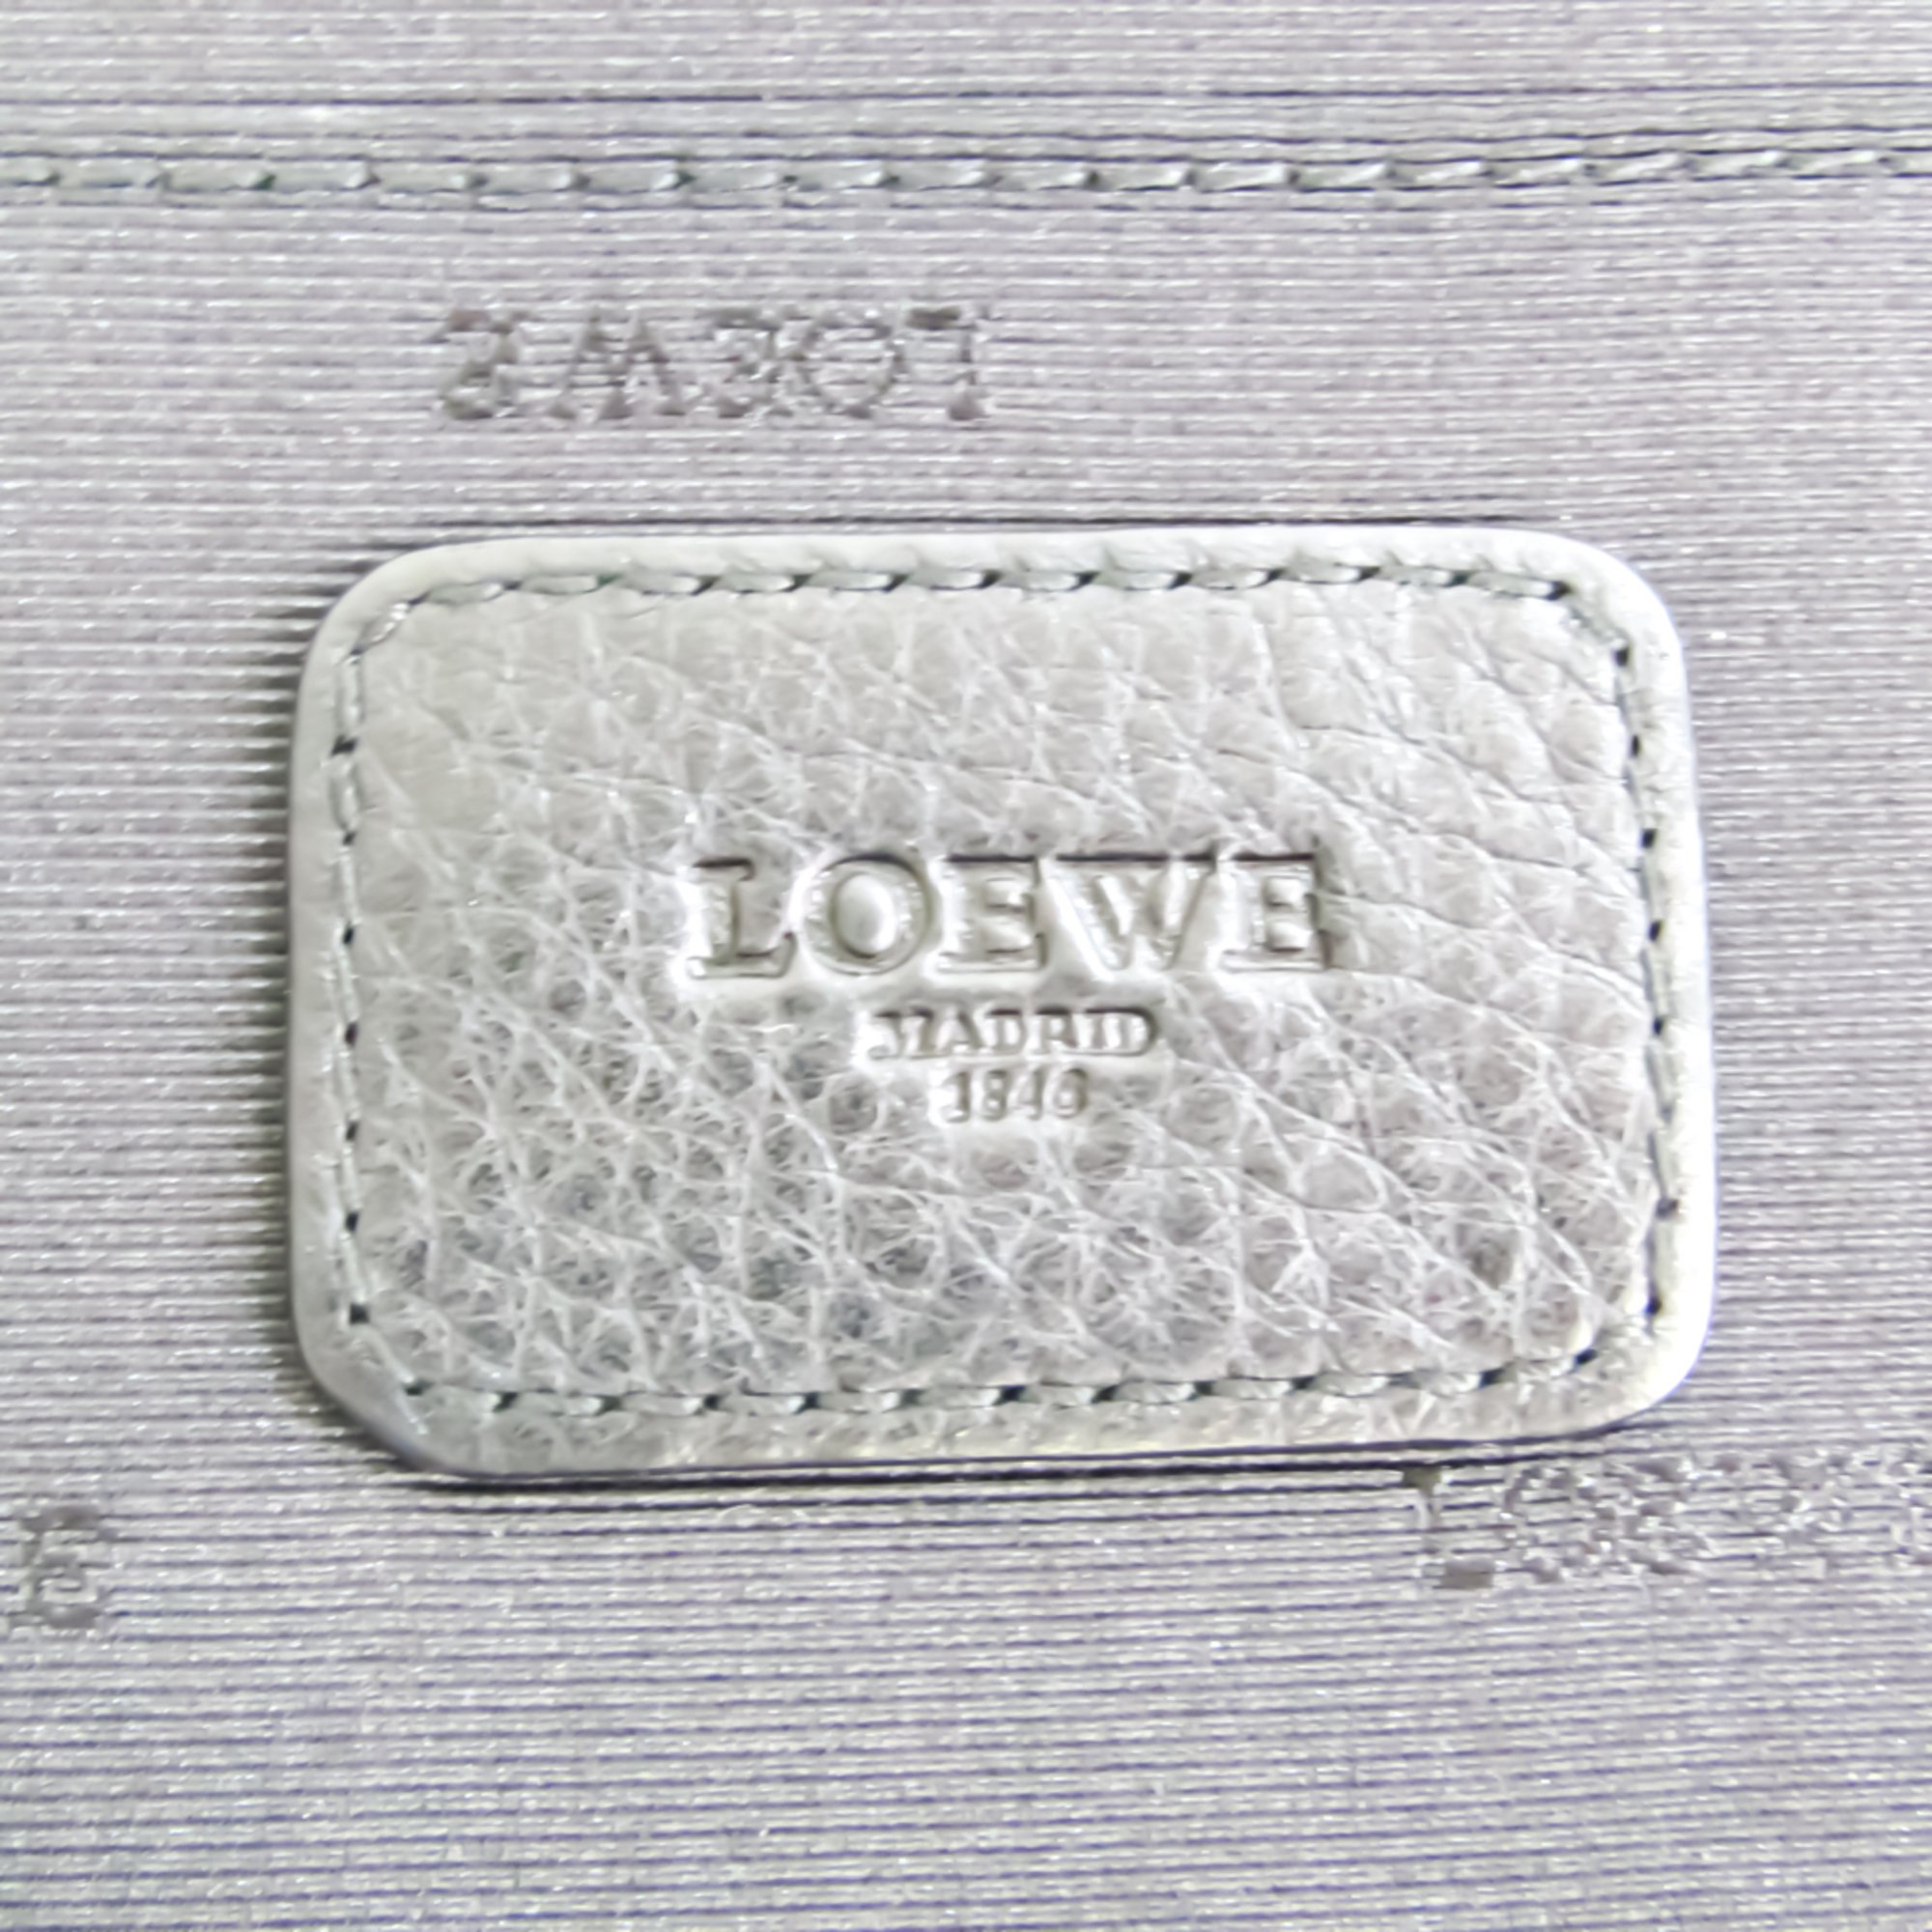 Loewe Unisex Leather Clutch Bag Black